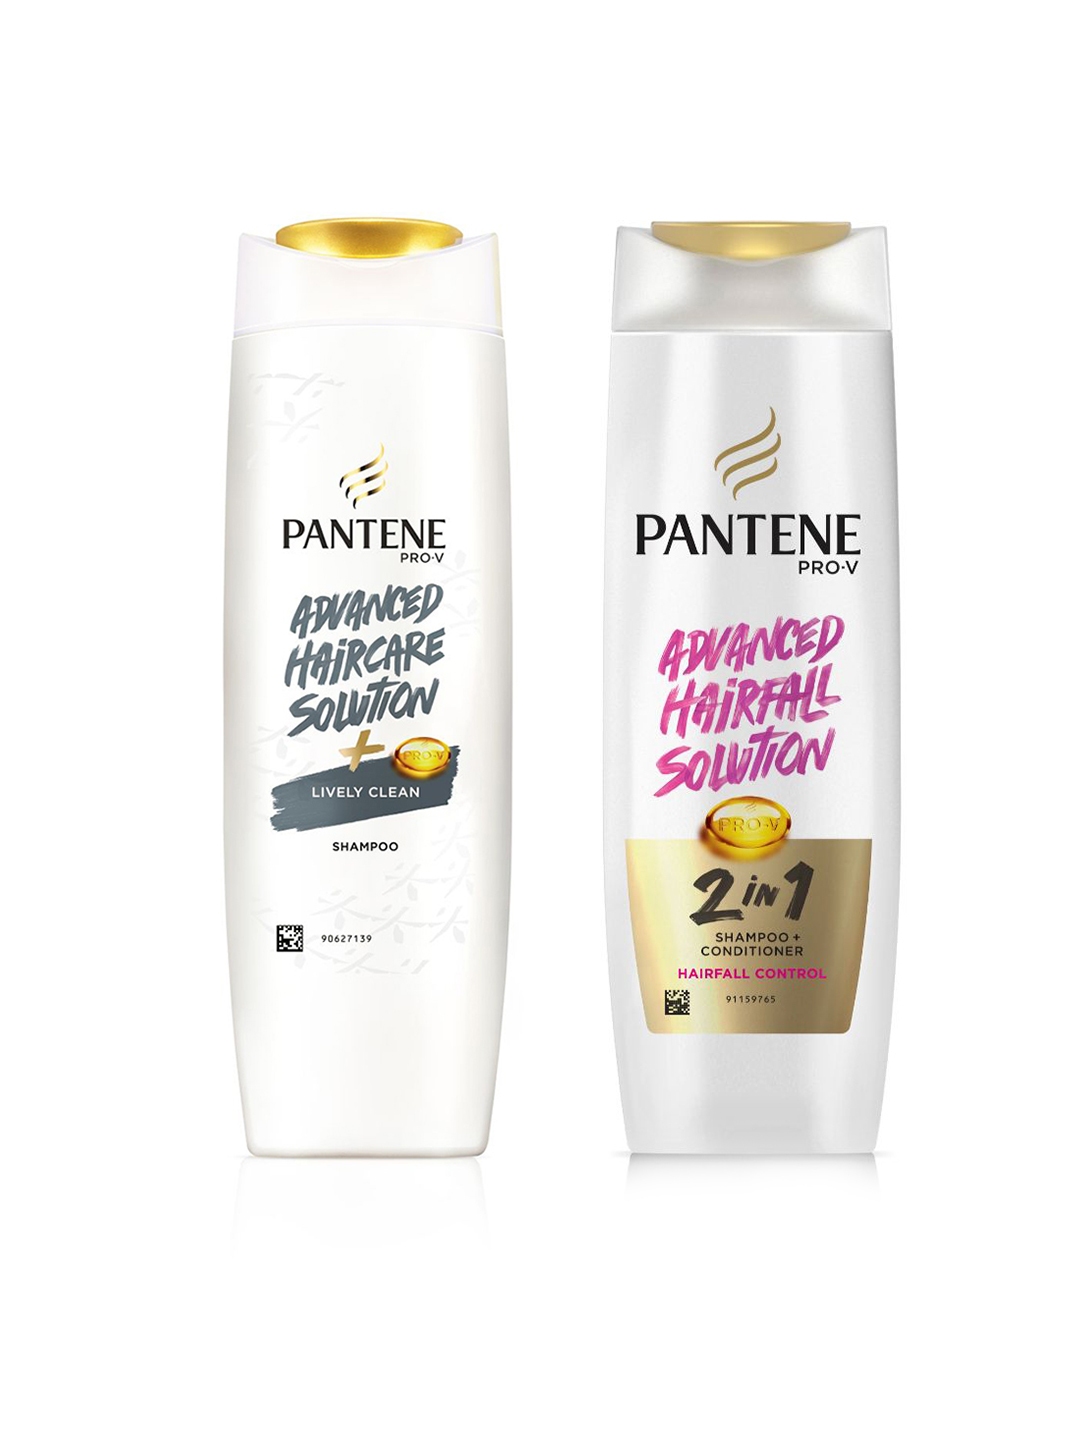 Pantene Set of Advanced Hair Shampoo   2 in 1 Shampoo+ Conditioner